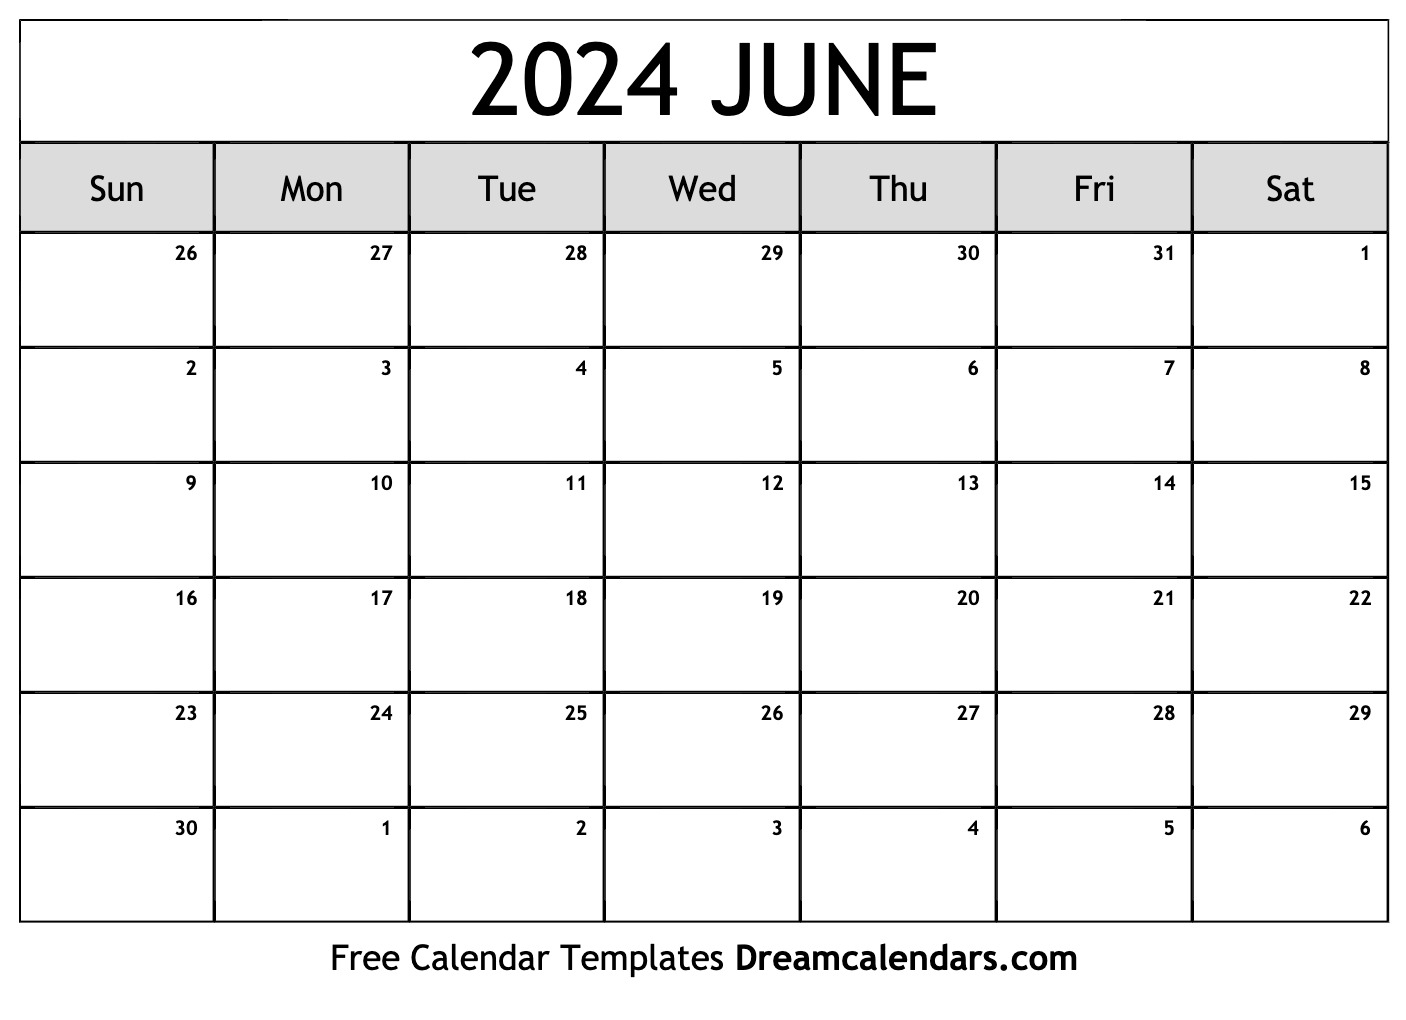 June 2024 Calendar | Free Blank Printable With Holidays for Free Printable Monthly Calendar 2024 June